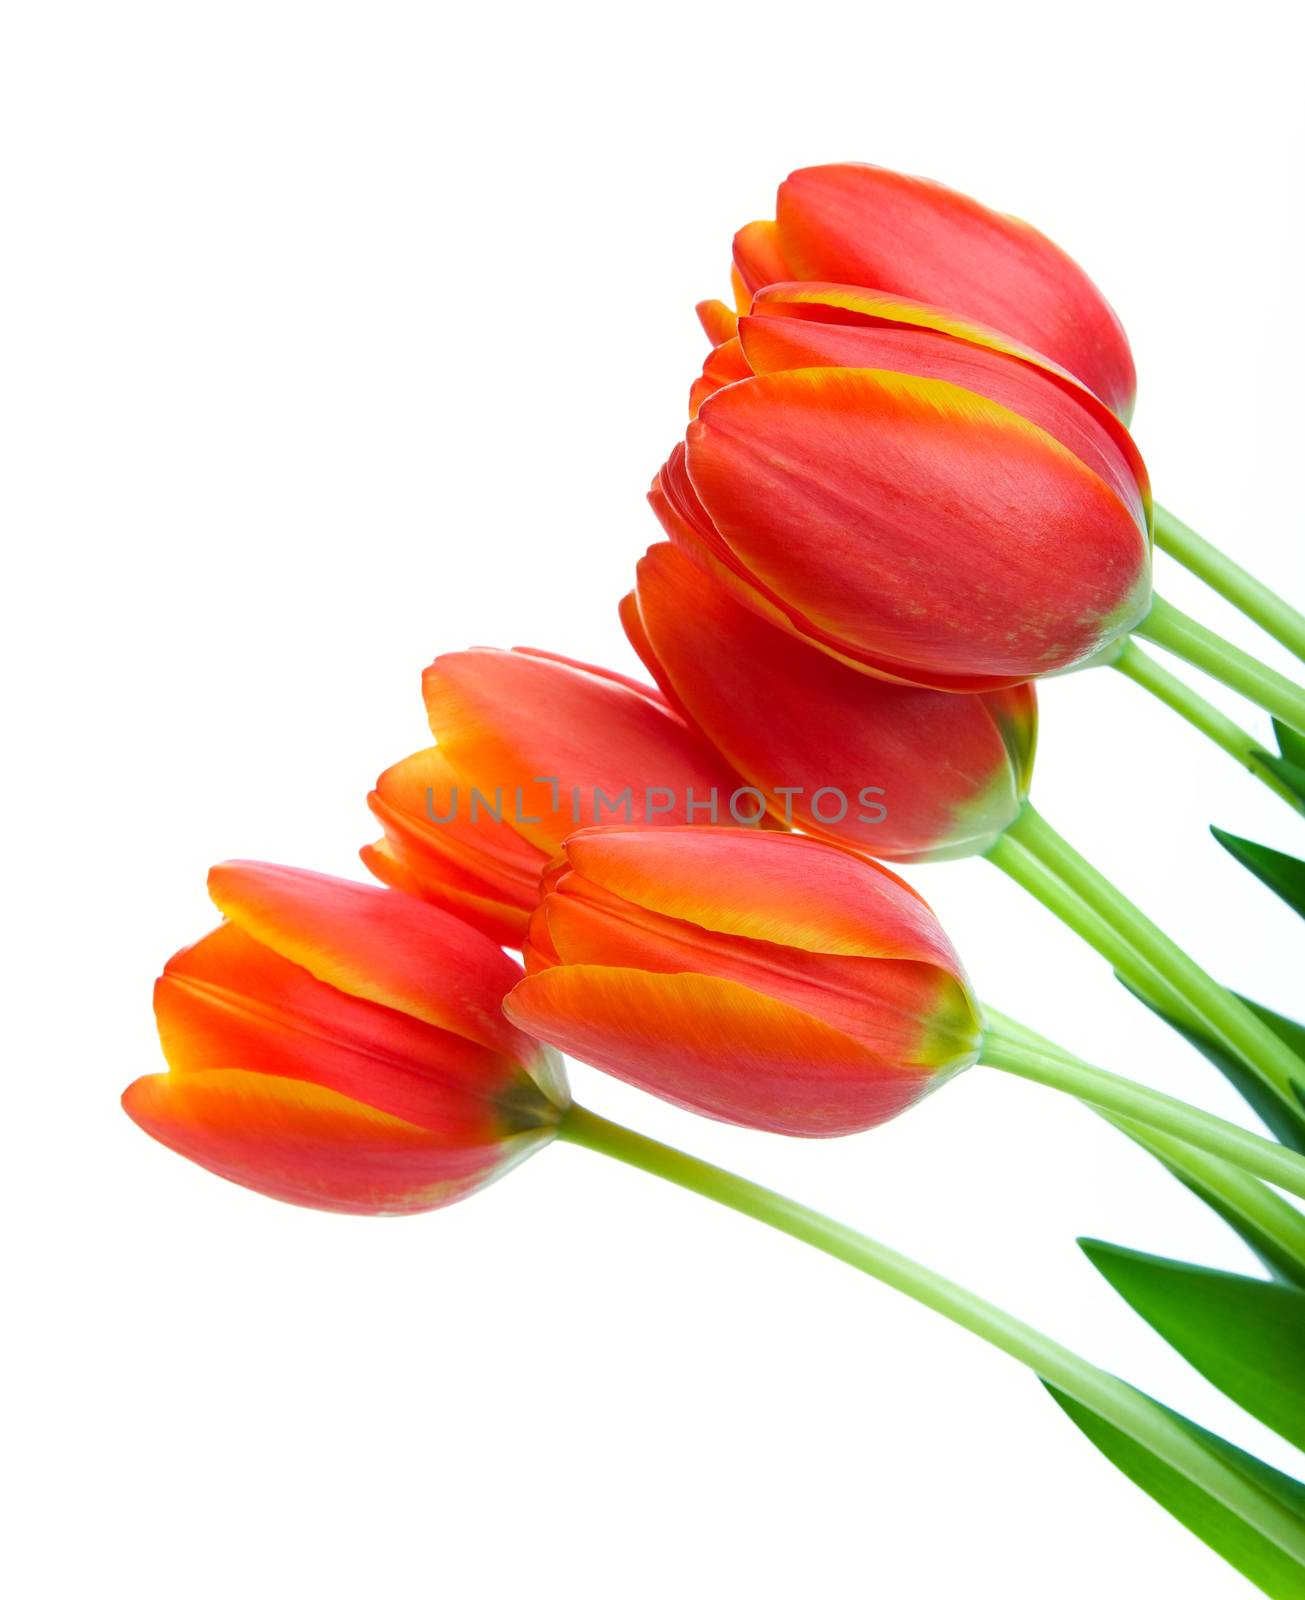 A graceful spray of orange & yellow bi-colored tulips.